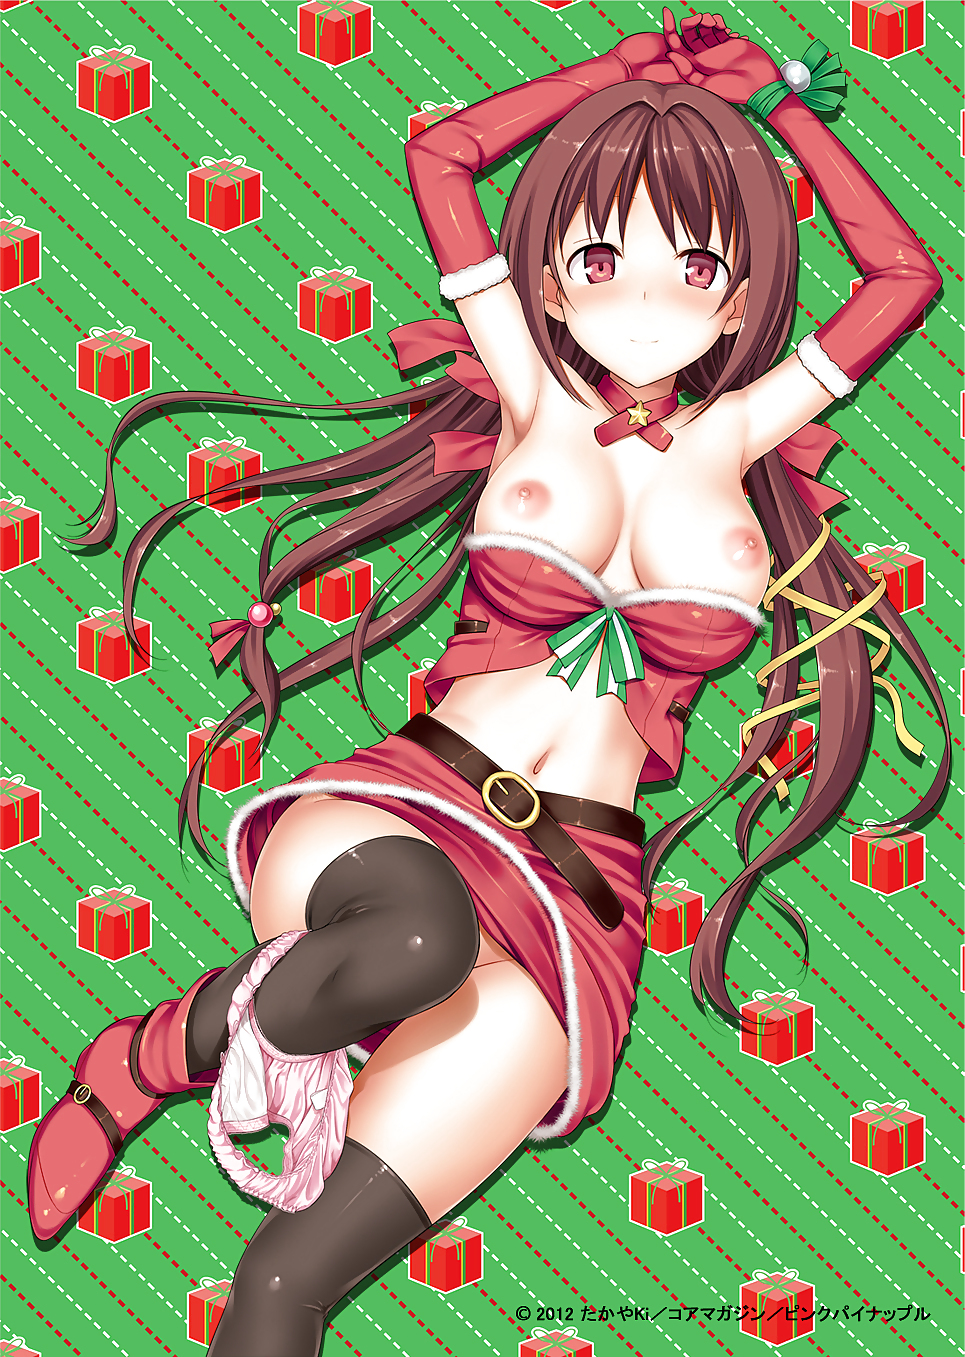 Holiday Hotties (Anime Style) #17388142